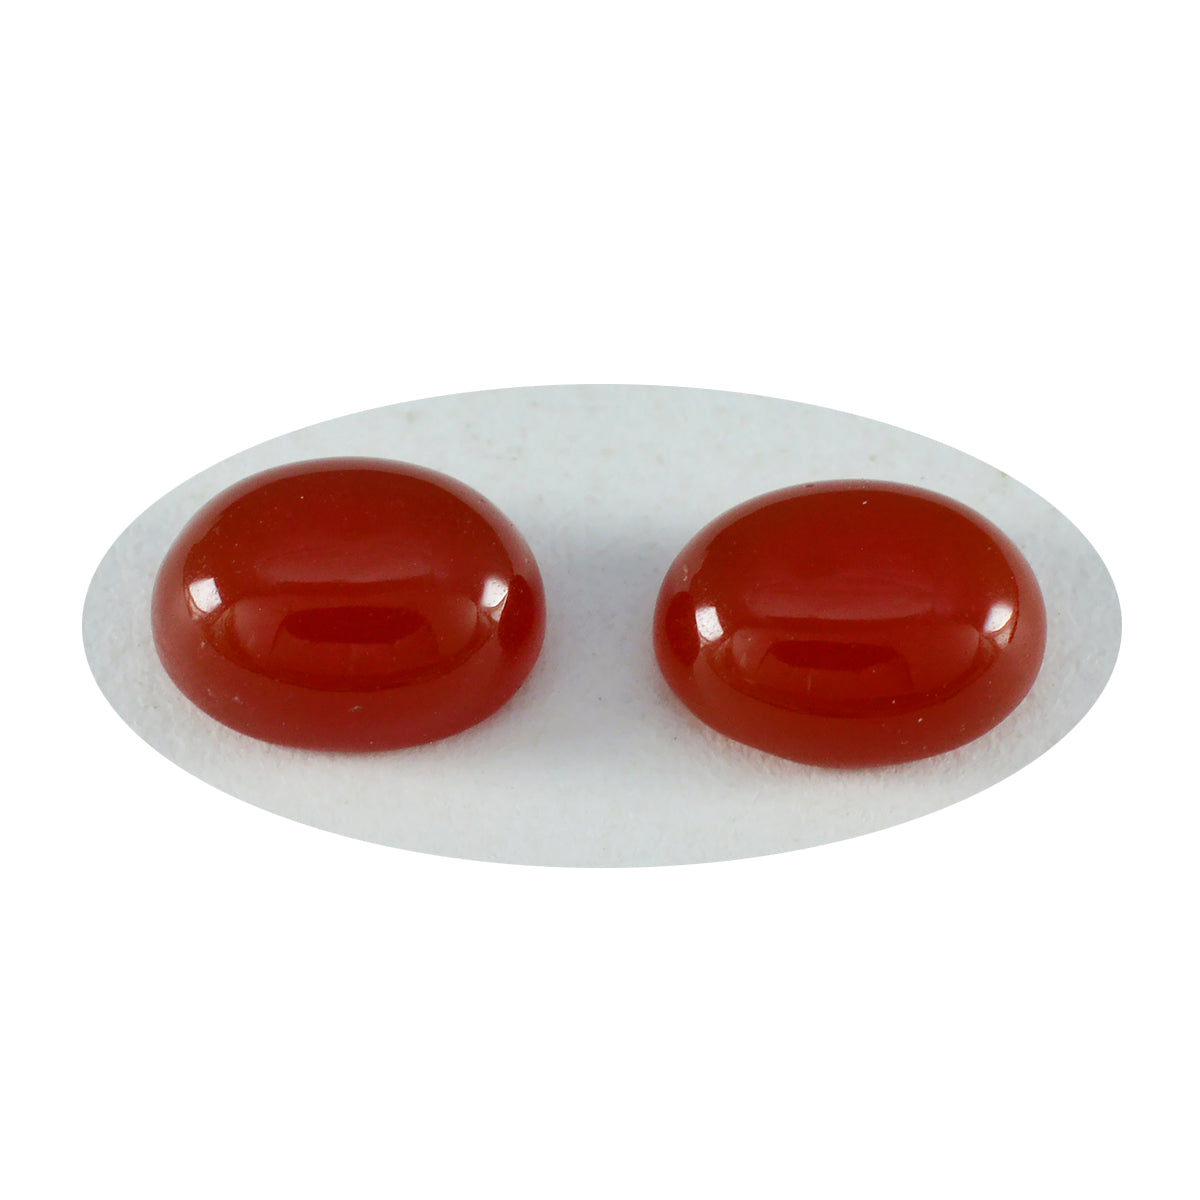 Riyogems 1 Stück roter Onyx-Cabochon, 10 x 14 mm, ovale Form, schöner Qualitäts-Edelstein